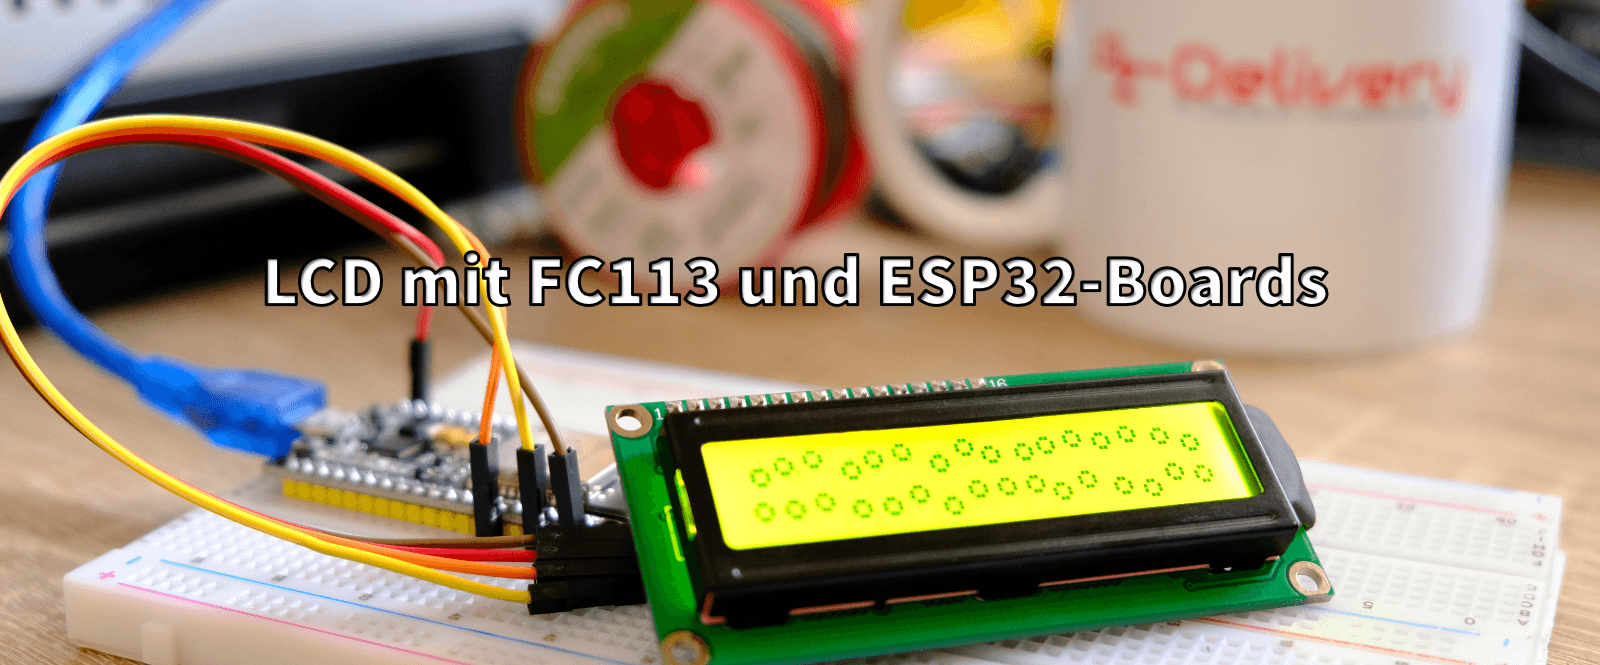 LCD mit FC113 und ESP32-Boards - AZ-Delivery